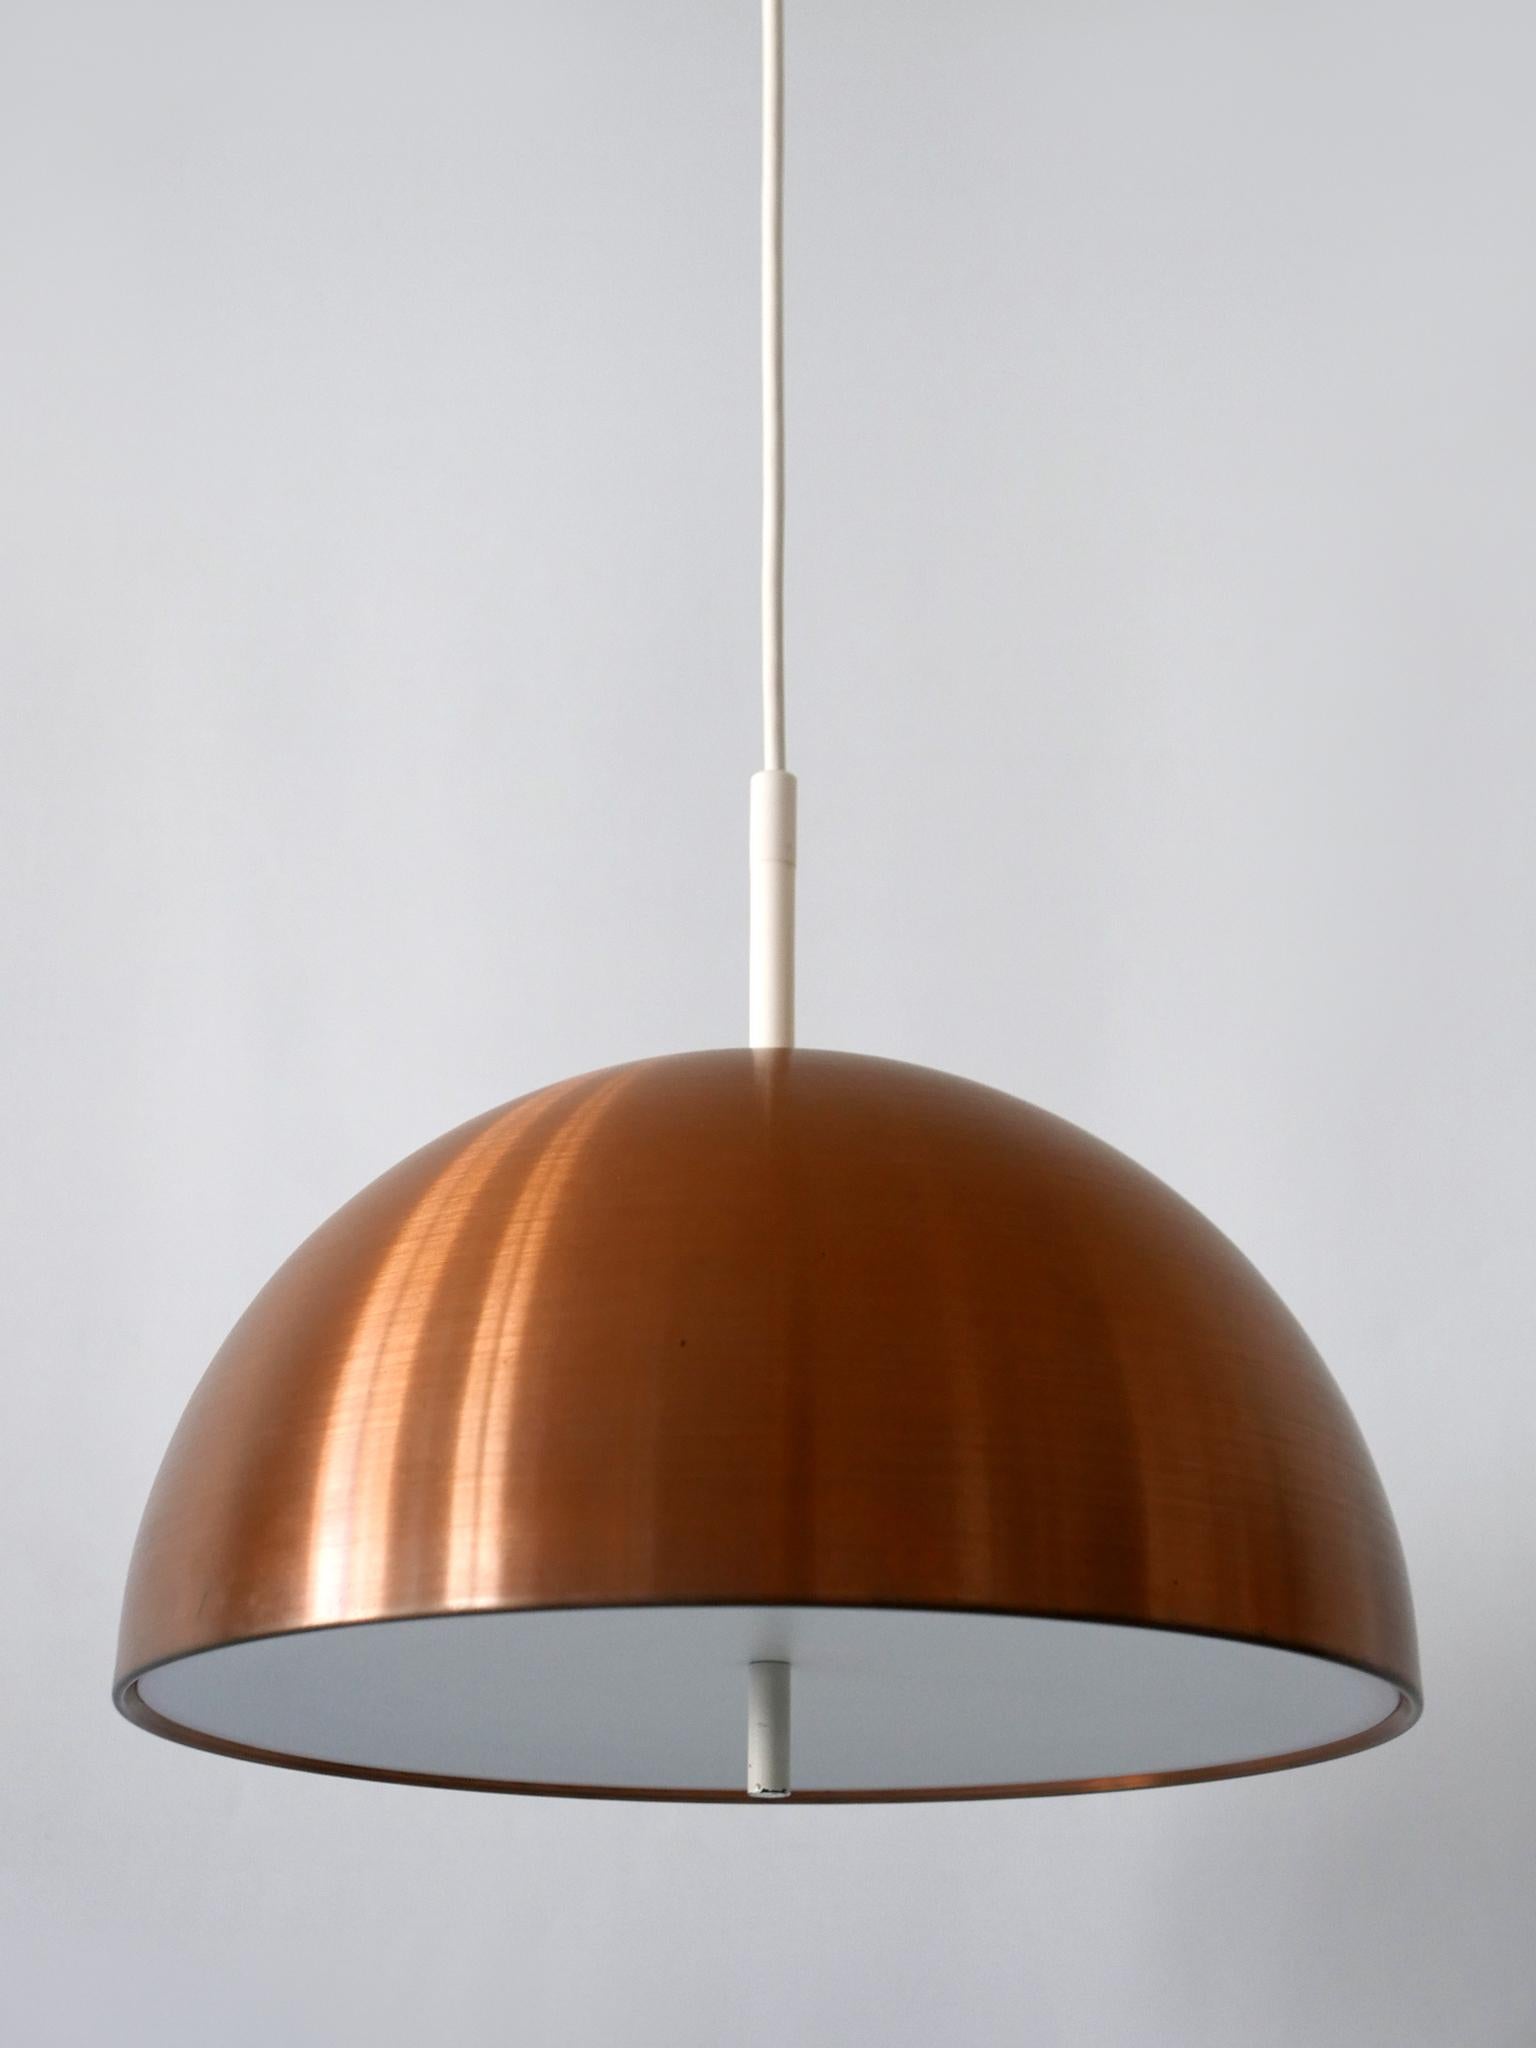 Elegant Mid-Century Modern Copper Pendant Lamp by Staff & Schwarz Germany, 1960s In Good Condition For Sale In Munich, DE